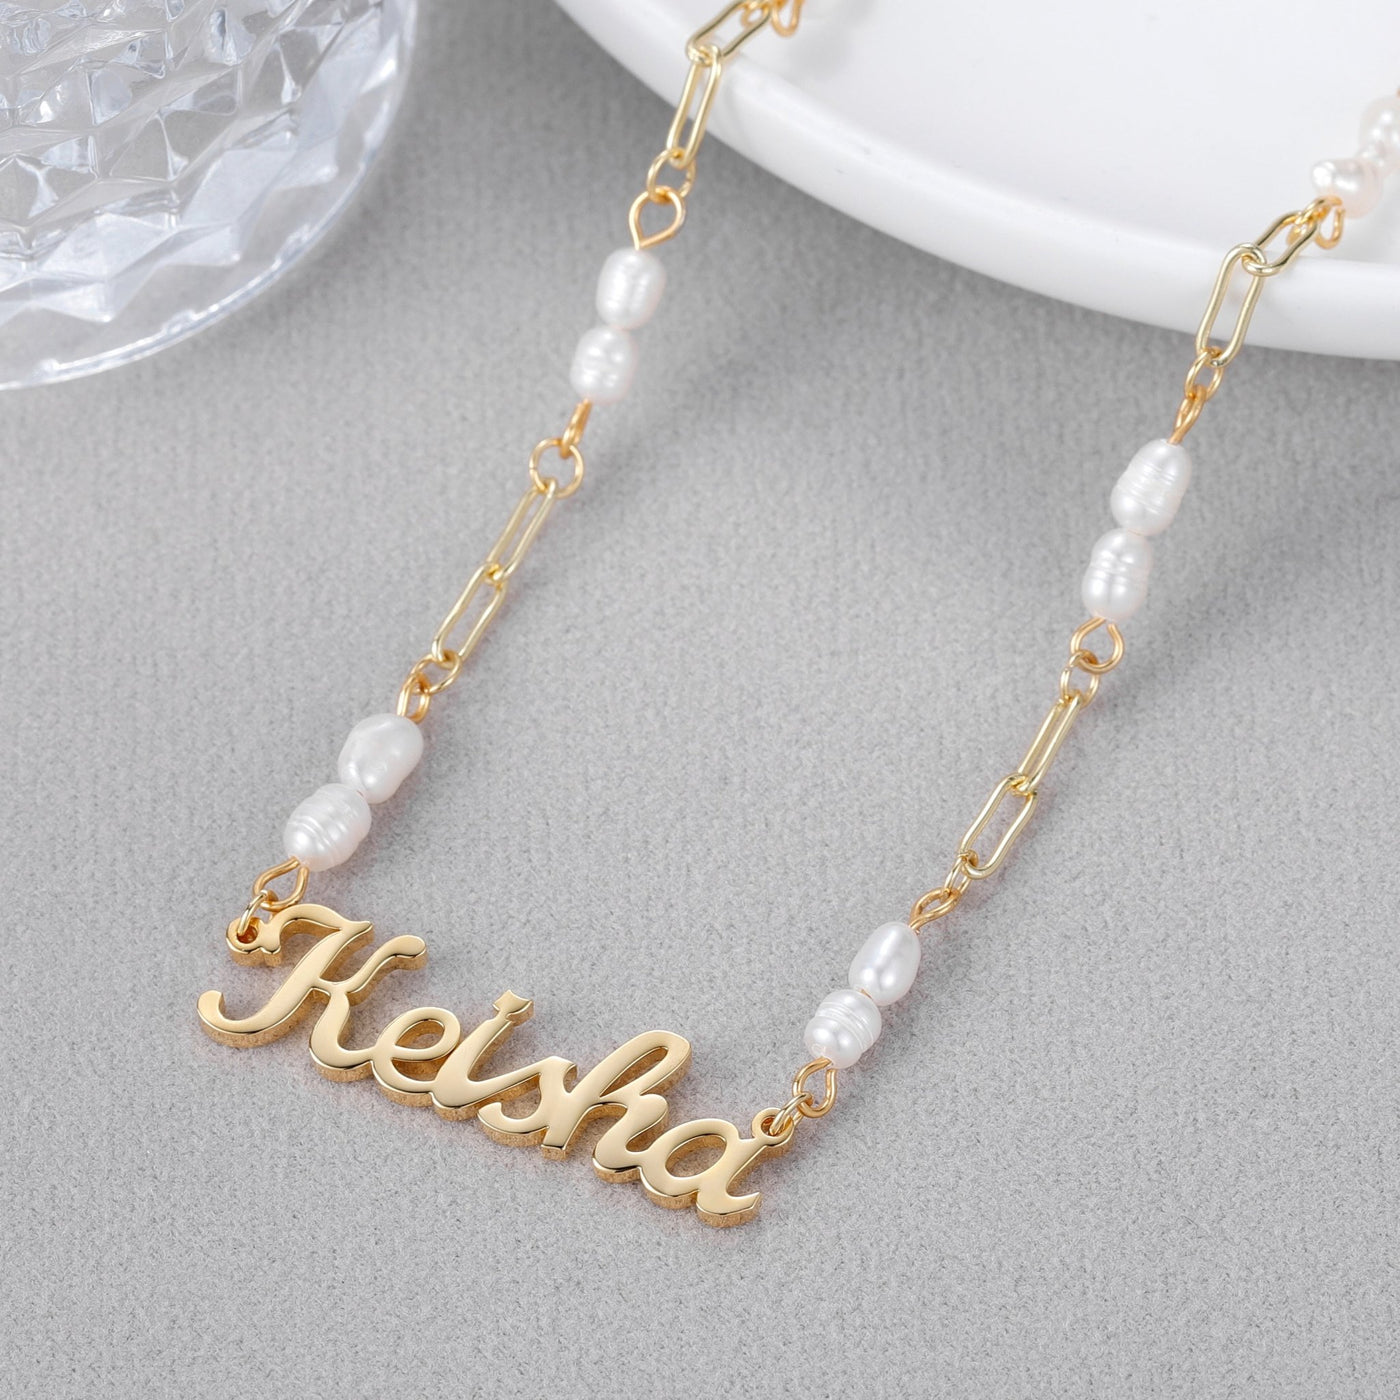 Rebel - Freshwater Pearls Custom Necklace - HouseofLx-18K Rose Gold